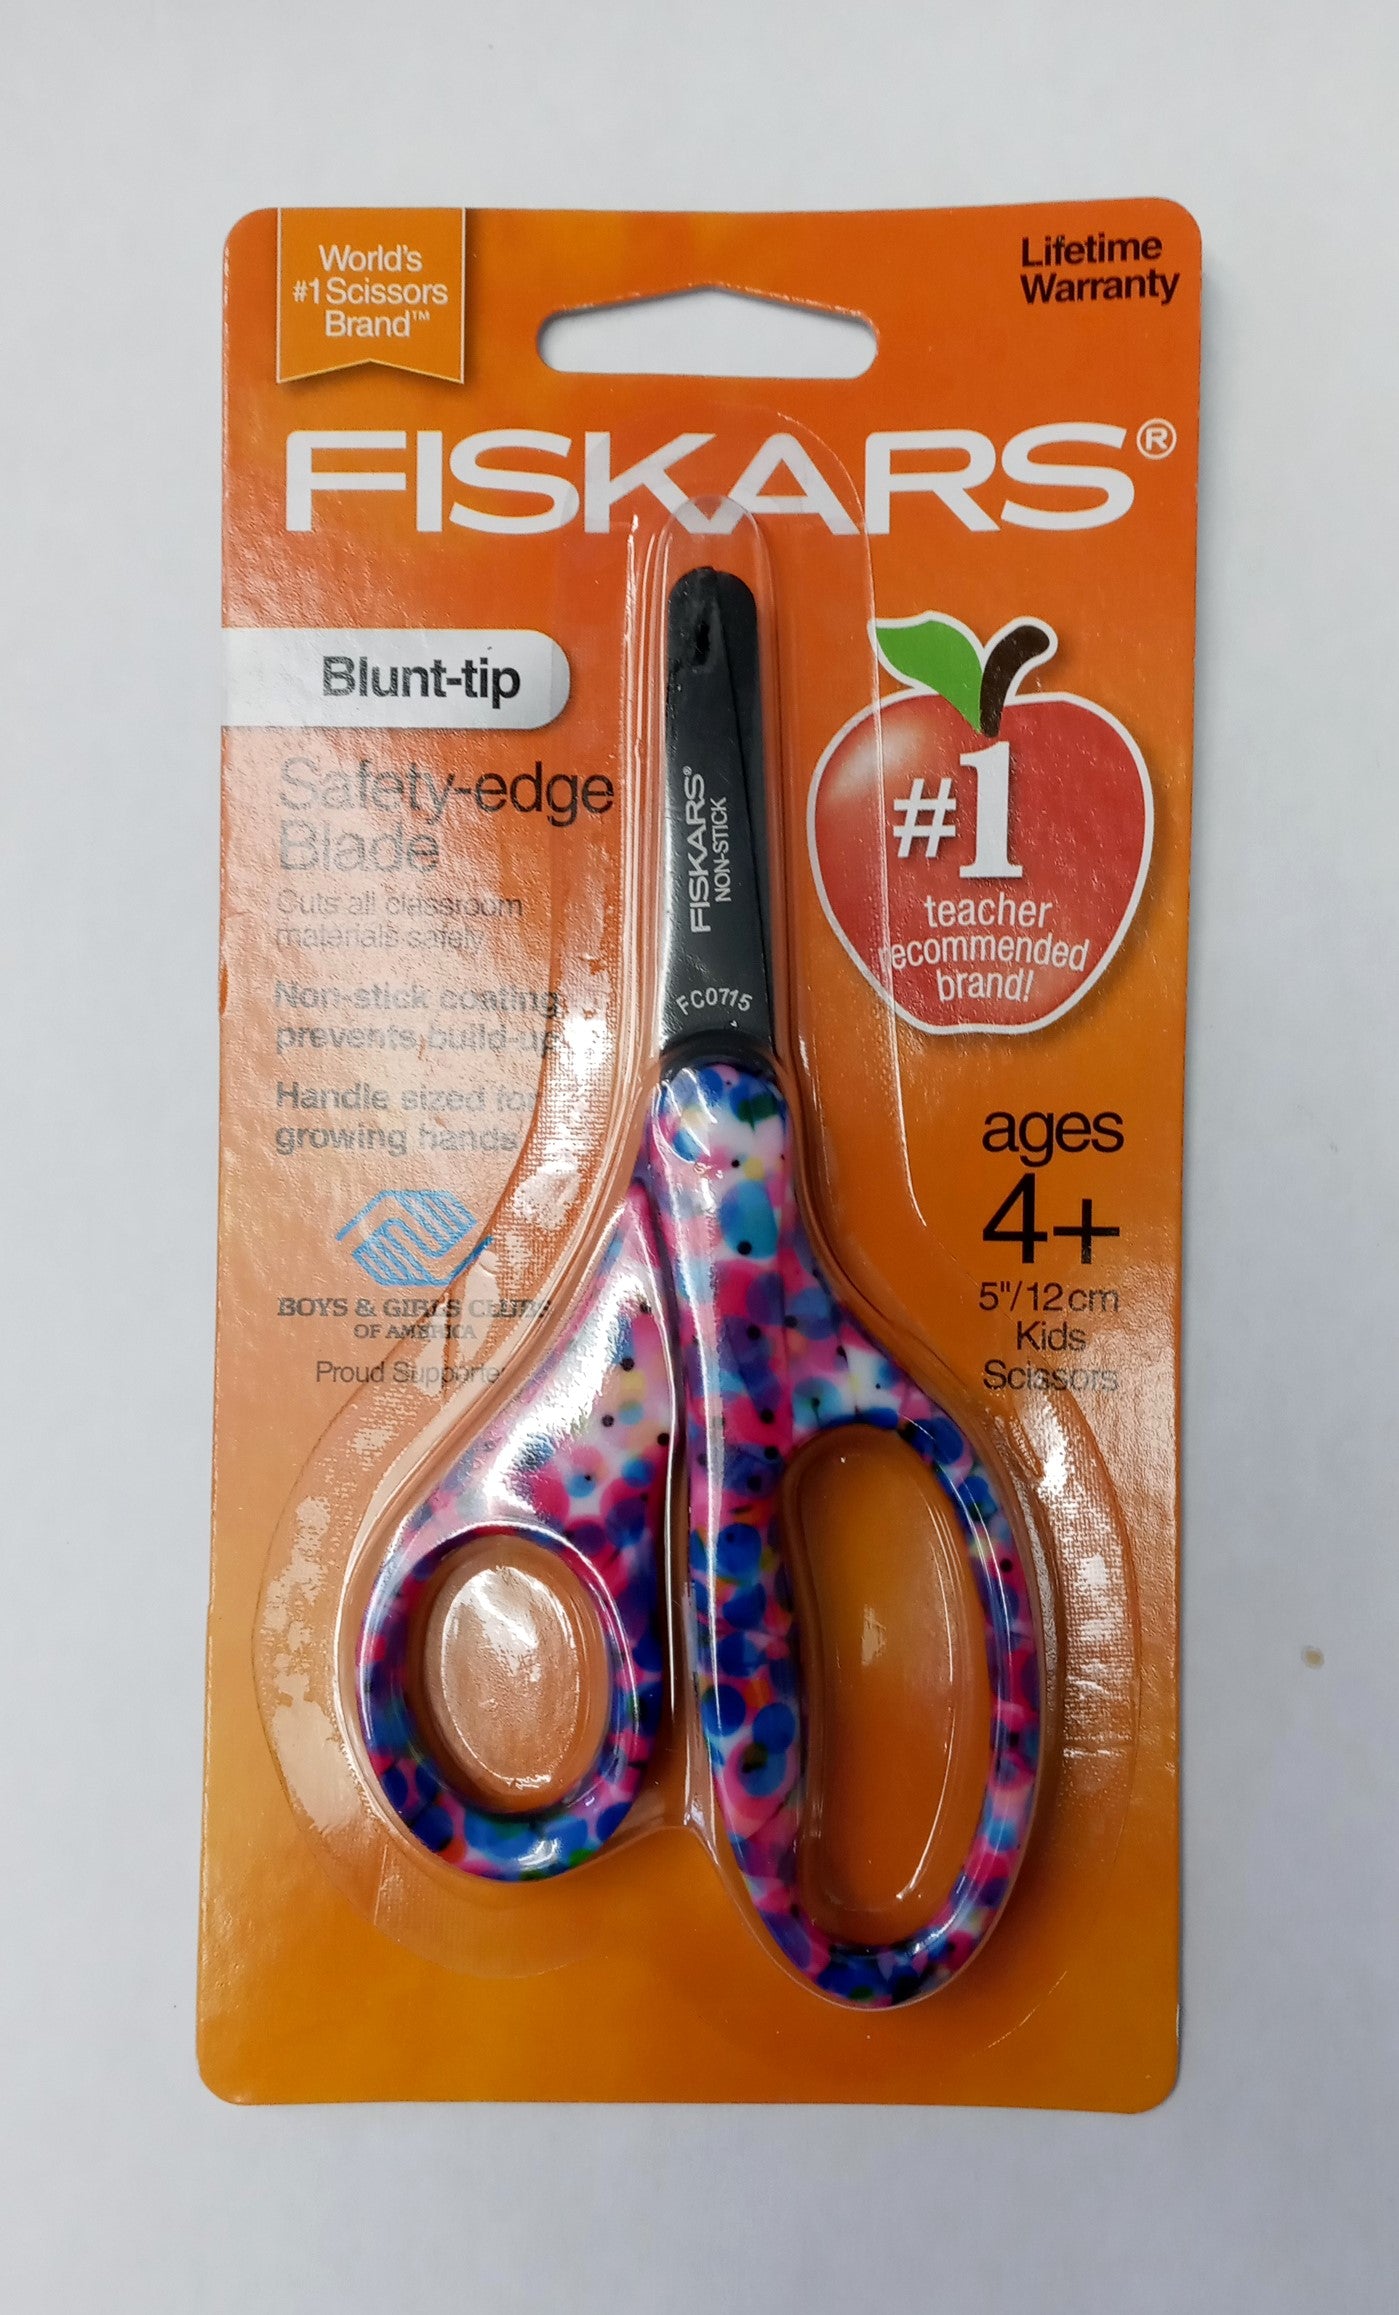 Fiskars 124162 5" Blunt-tip Safety-edge Kid Scissors 2pc (assorted colors)